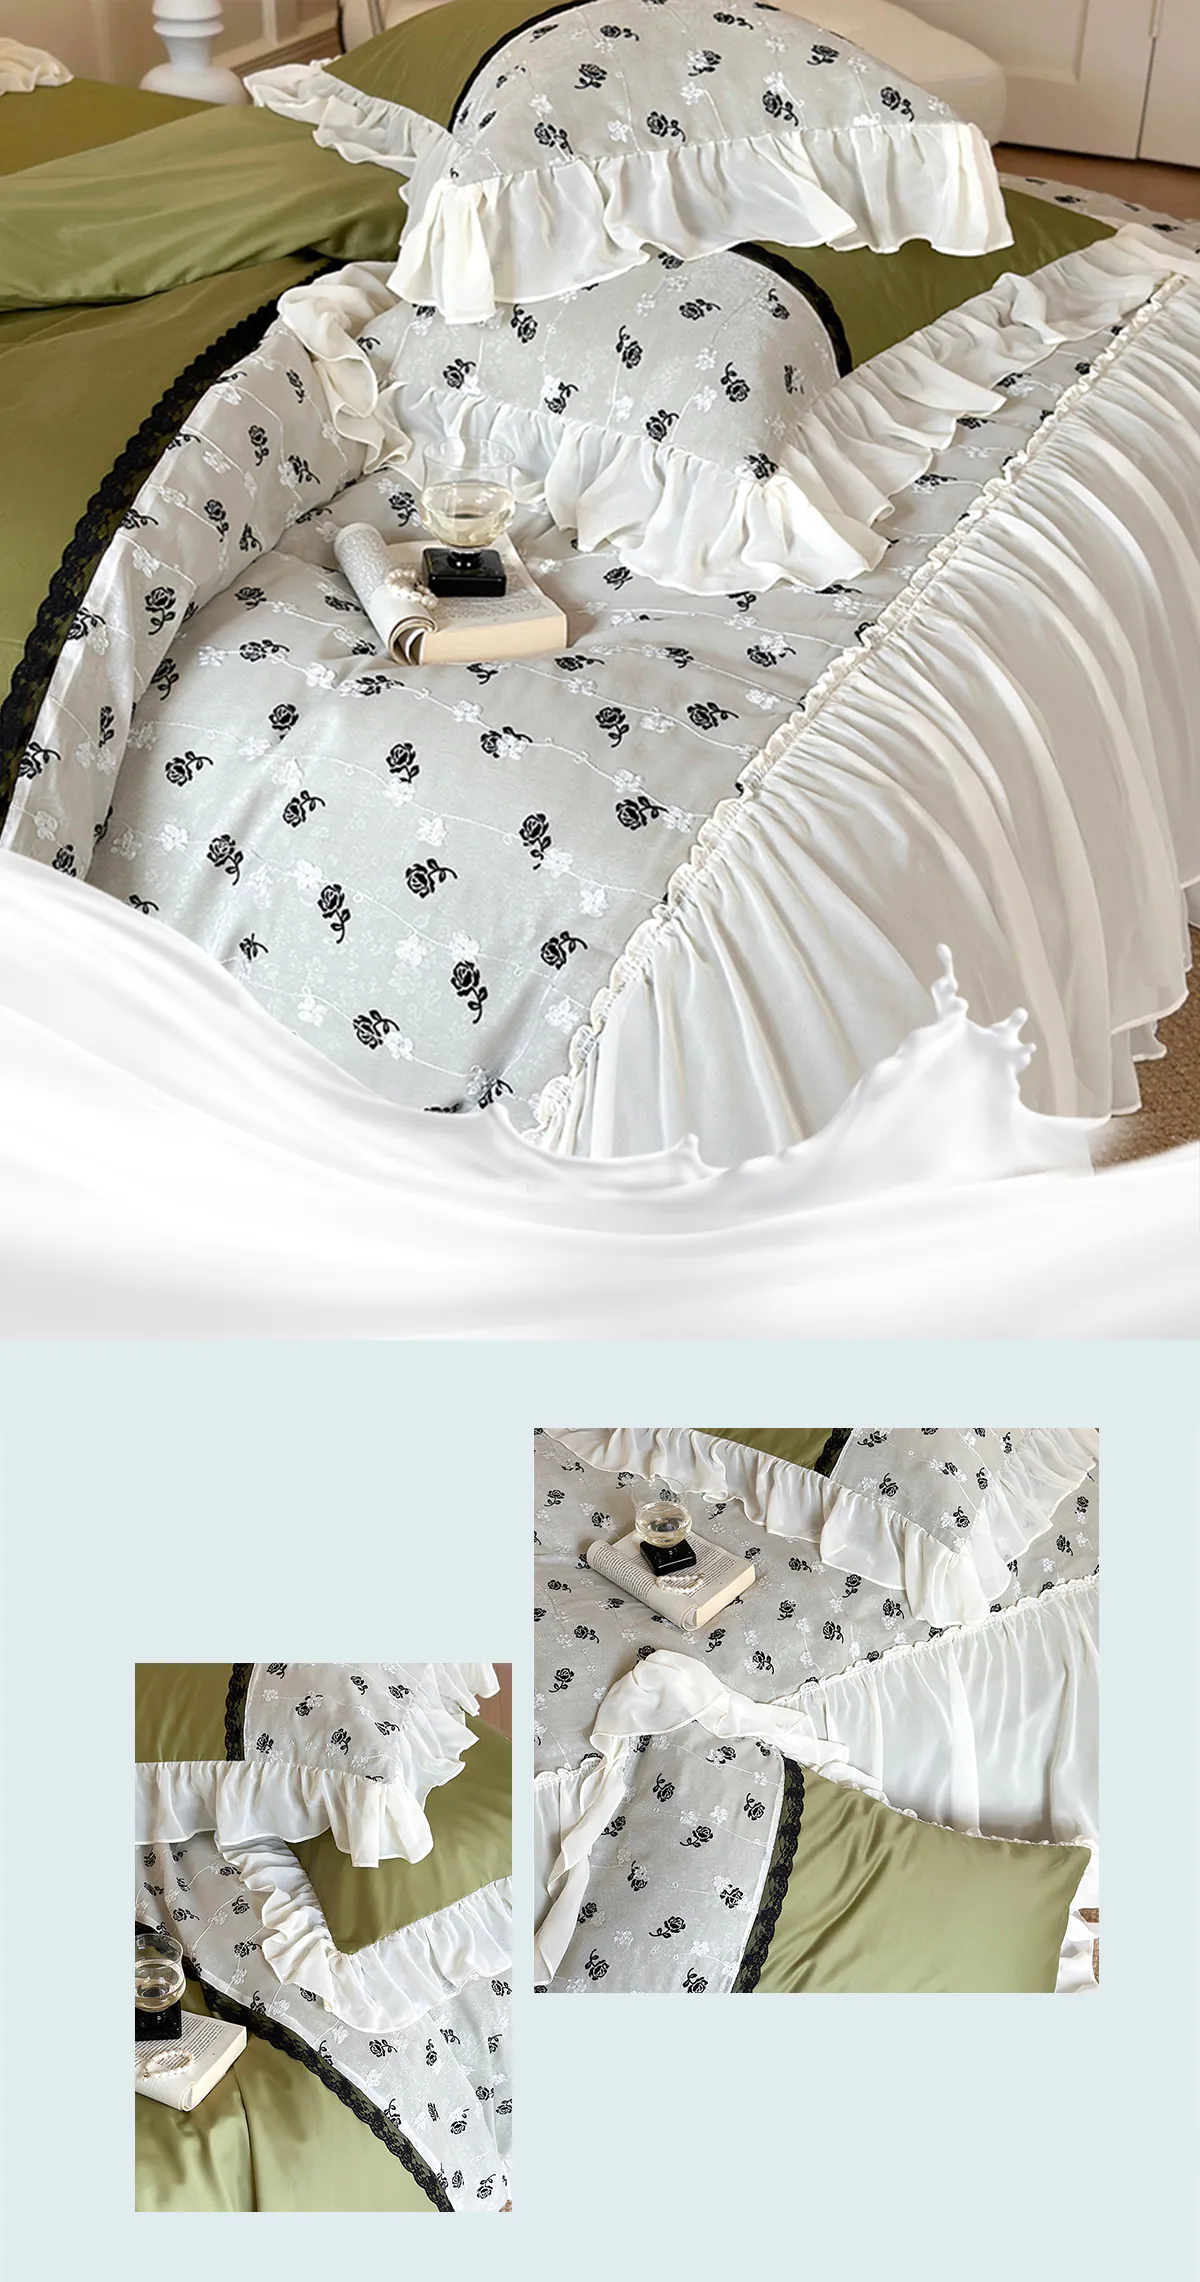 Cozy-Princess-Style-Egyptian-Cotton-Duvet-Cover-Bedding-4-Pcs-Set12